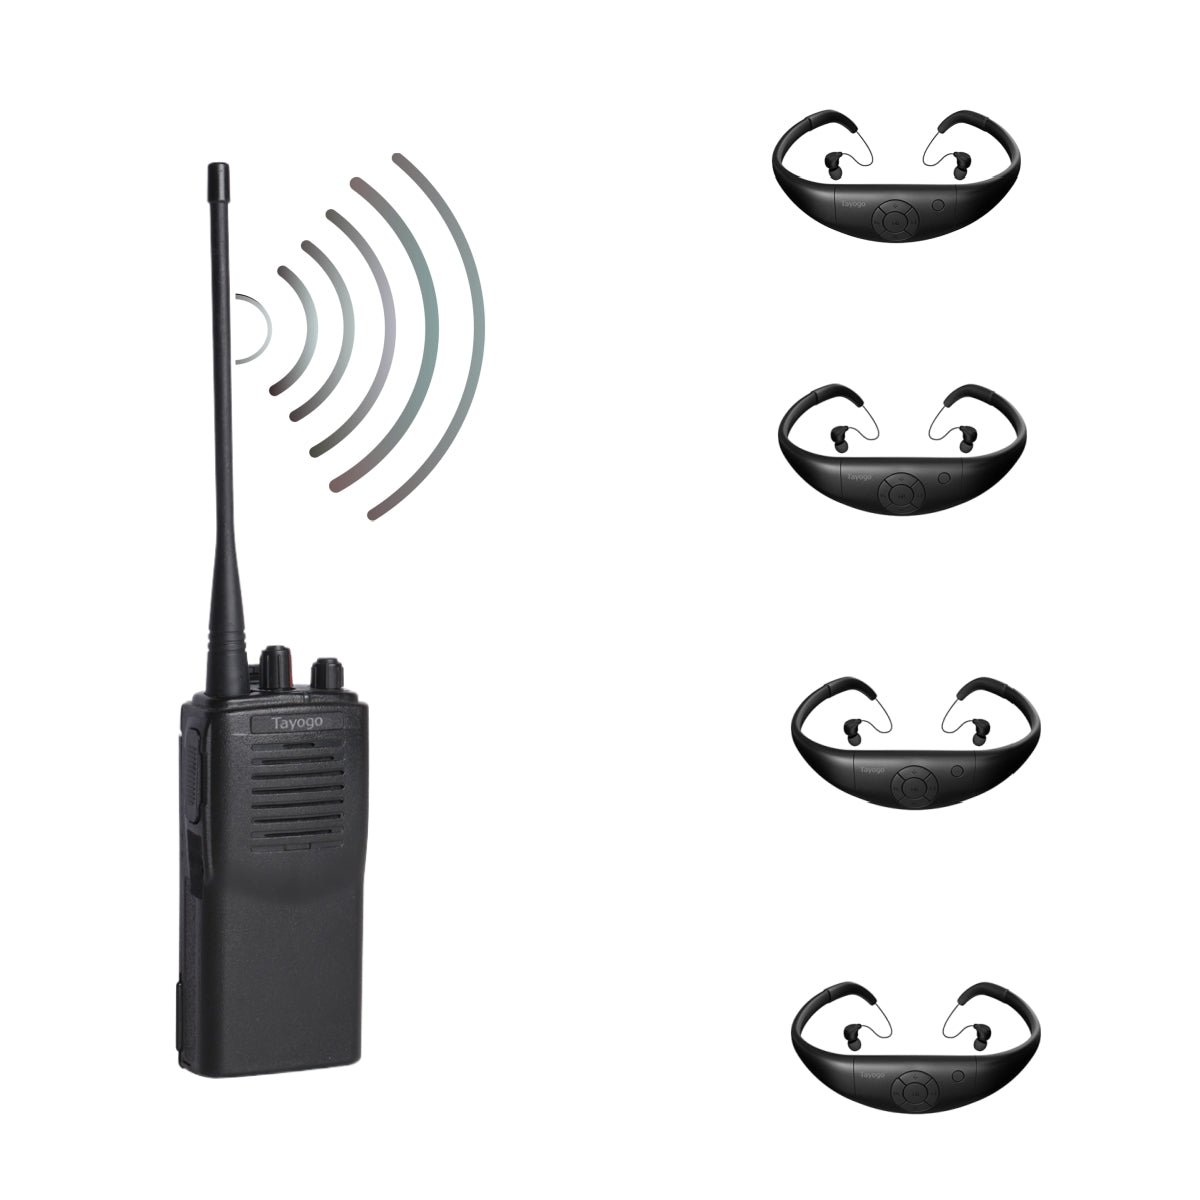 Tayogo Waterproof Wireless Transmitter for Swimming Training, IPX8 Swimming Headphones Receiver